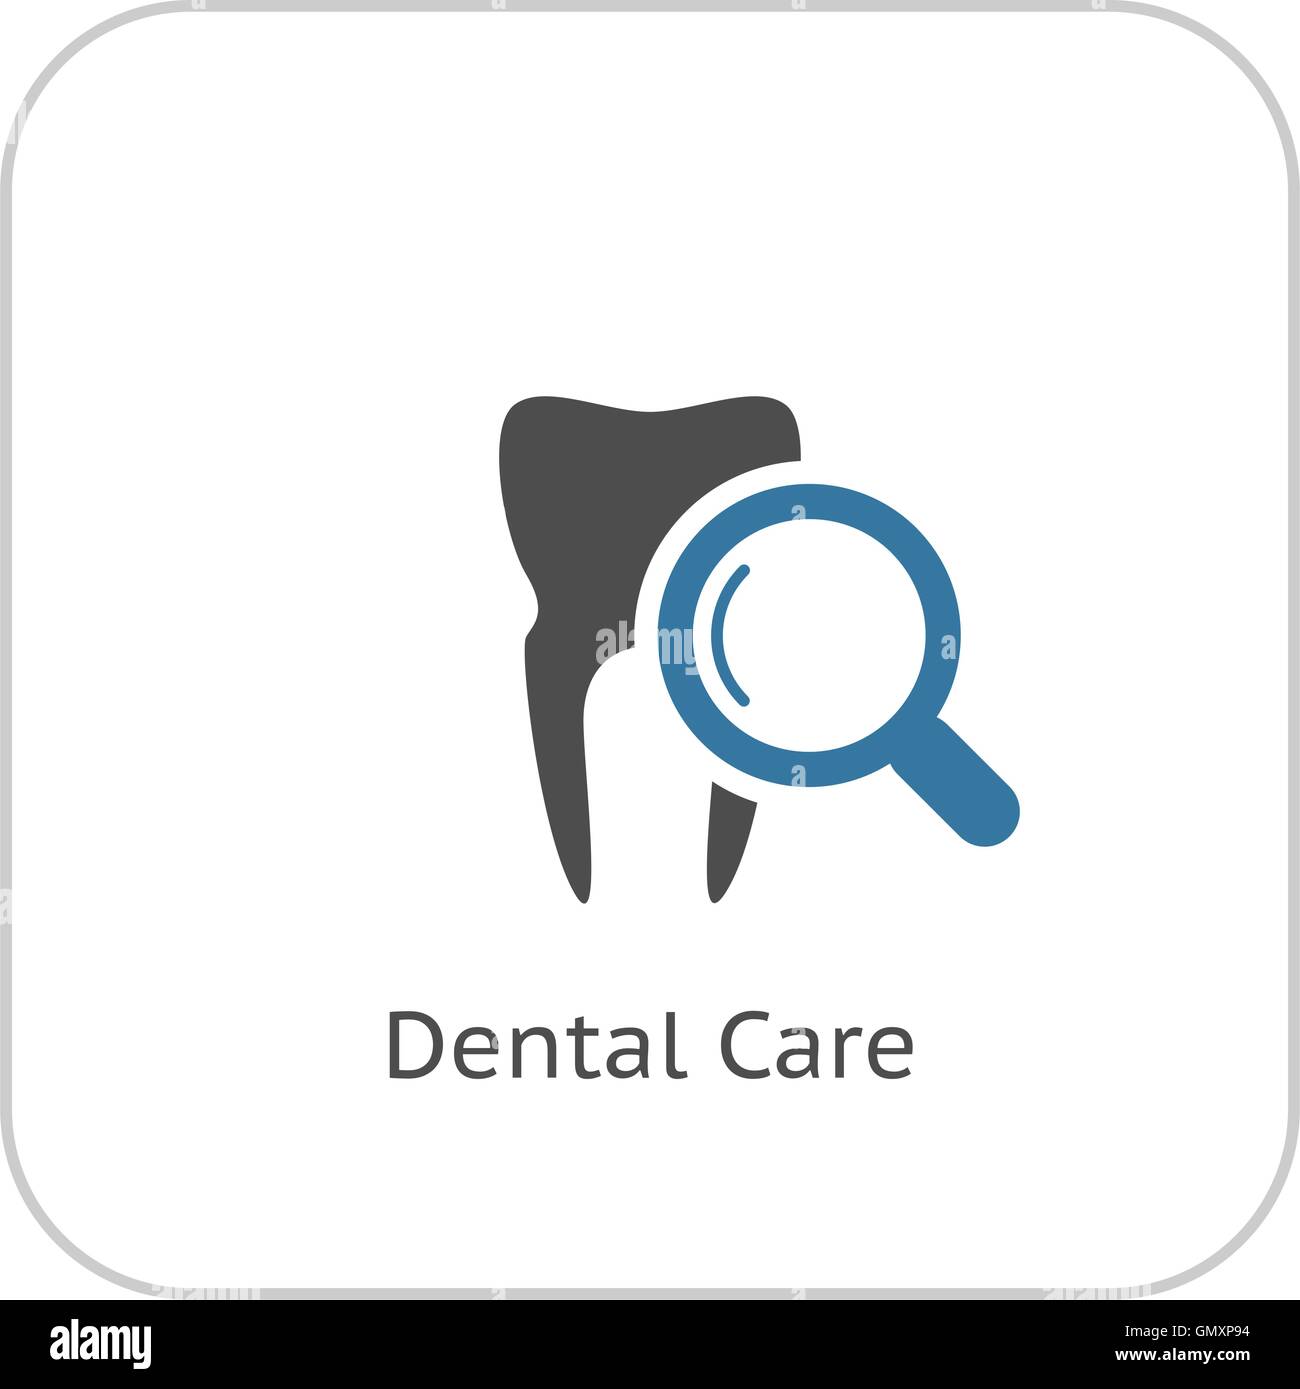 Dental Care Icon. Flat Design. Stock Vector